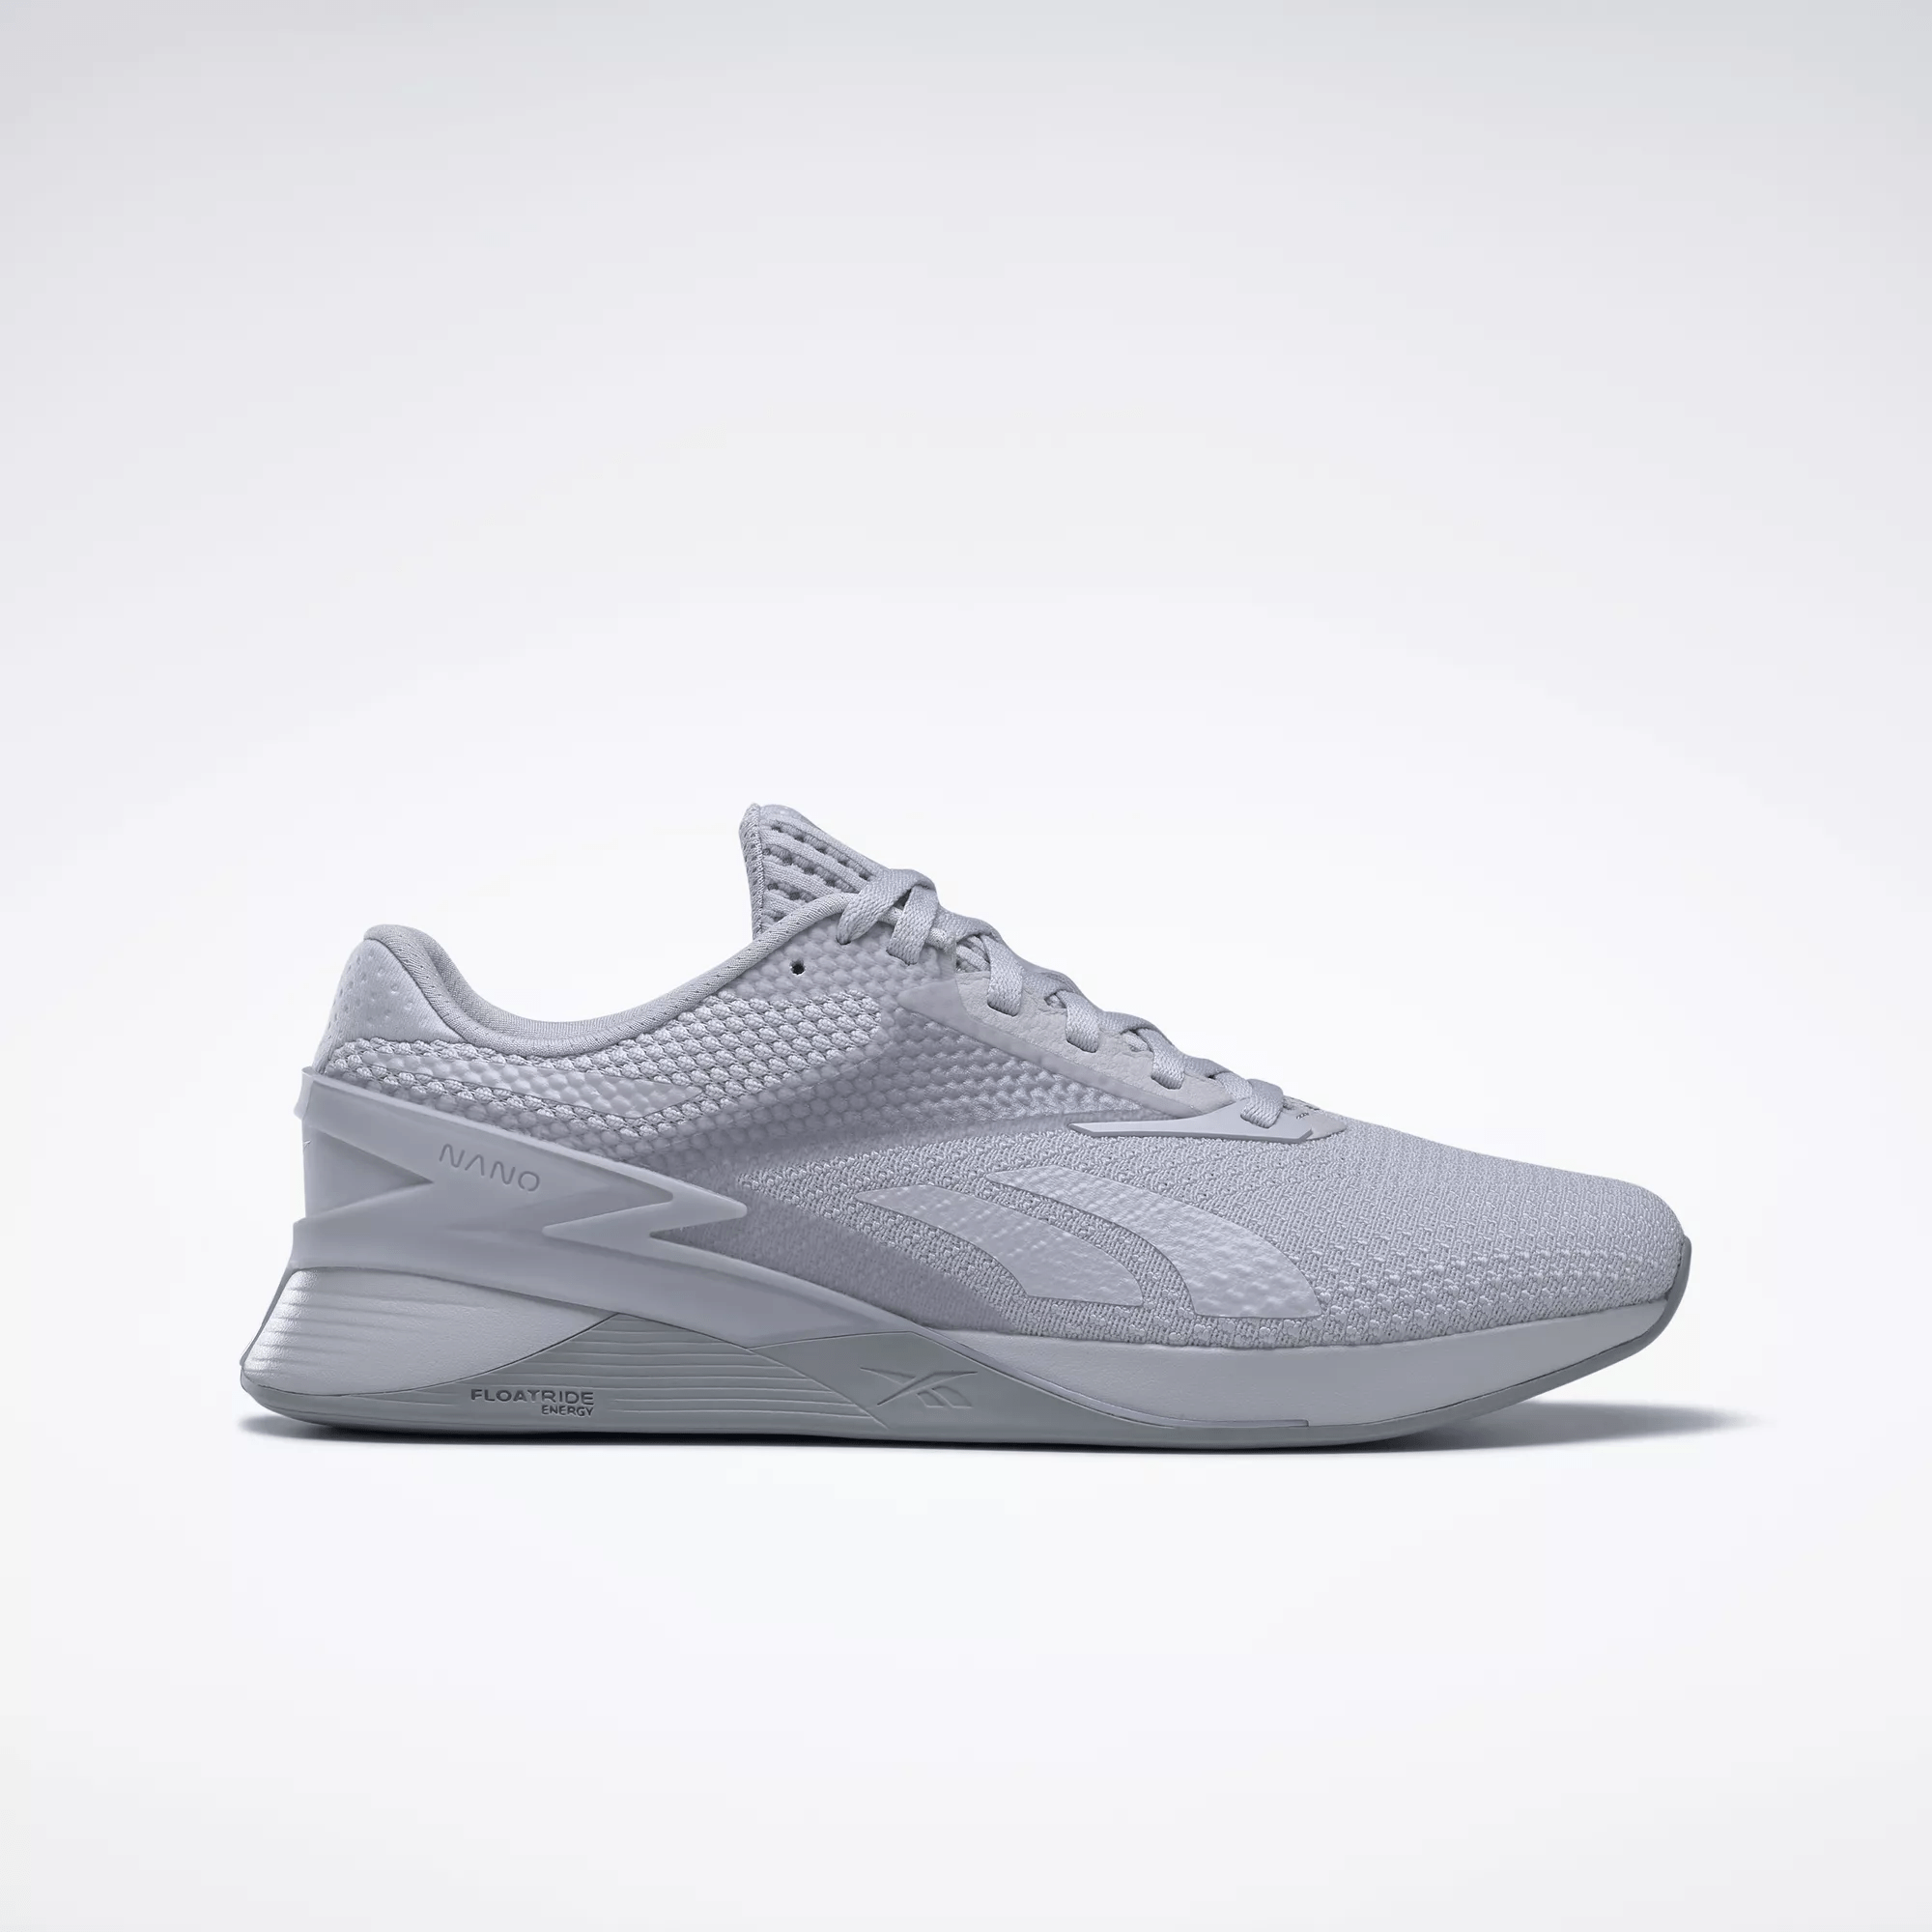 Reebok Nano X3 Shoes In Grey